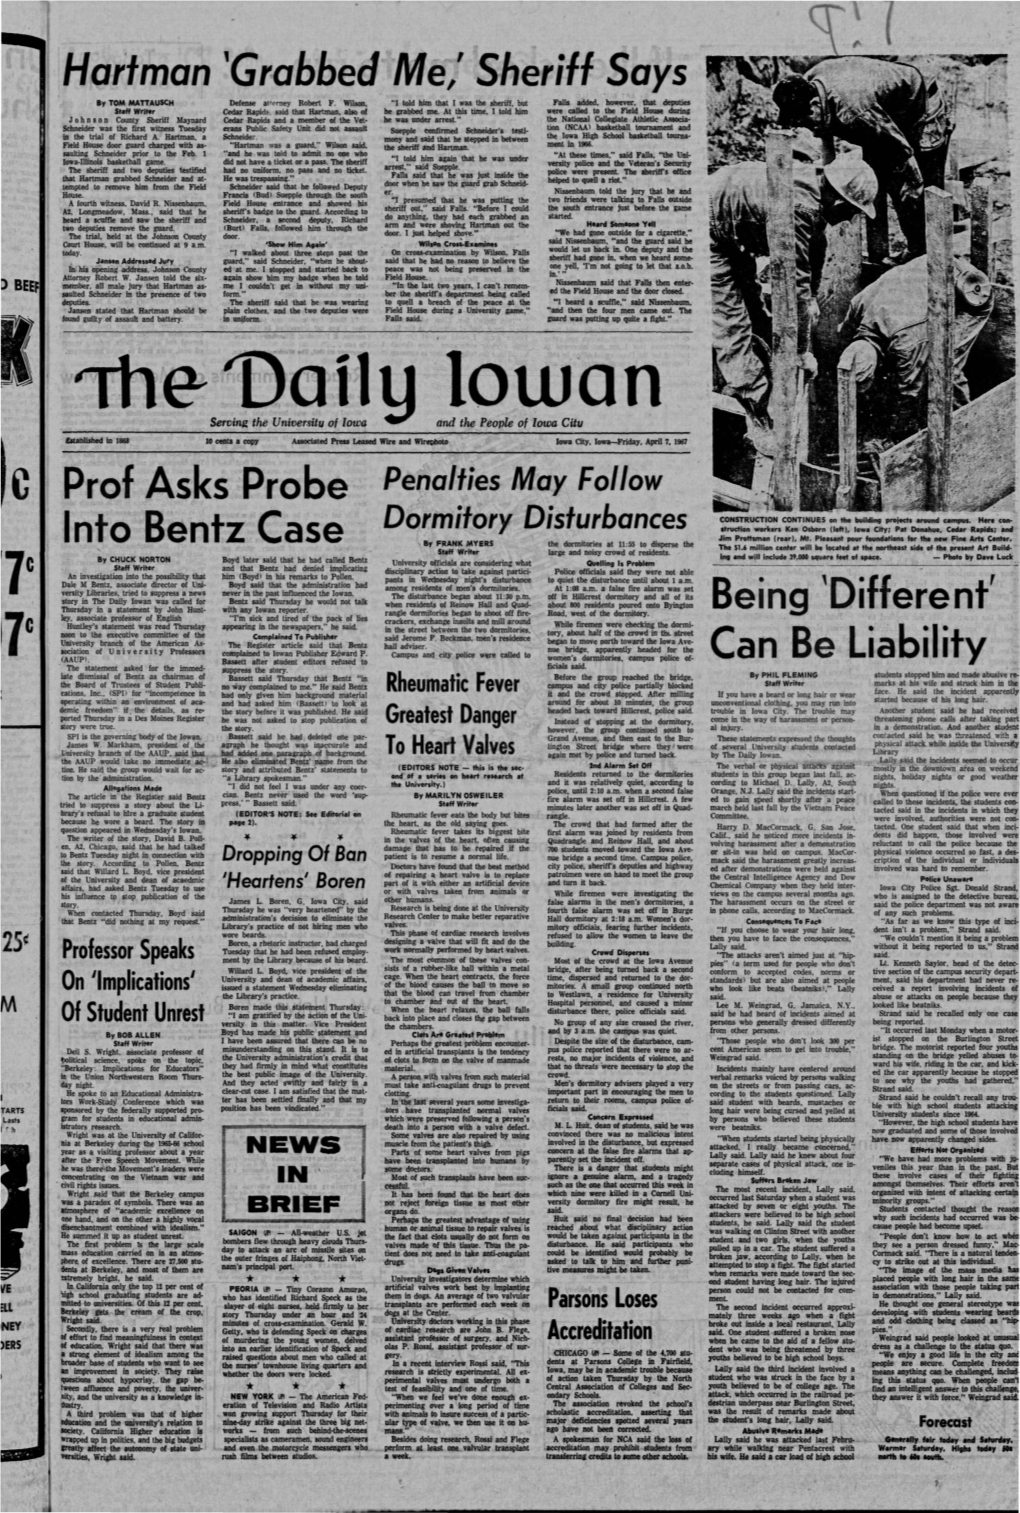 April 7, 1967 Penalties May Follow Prof